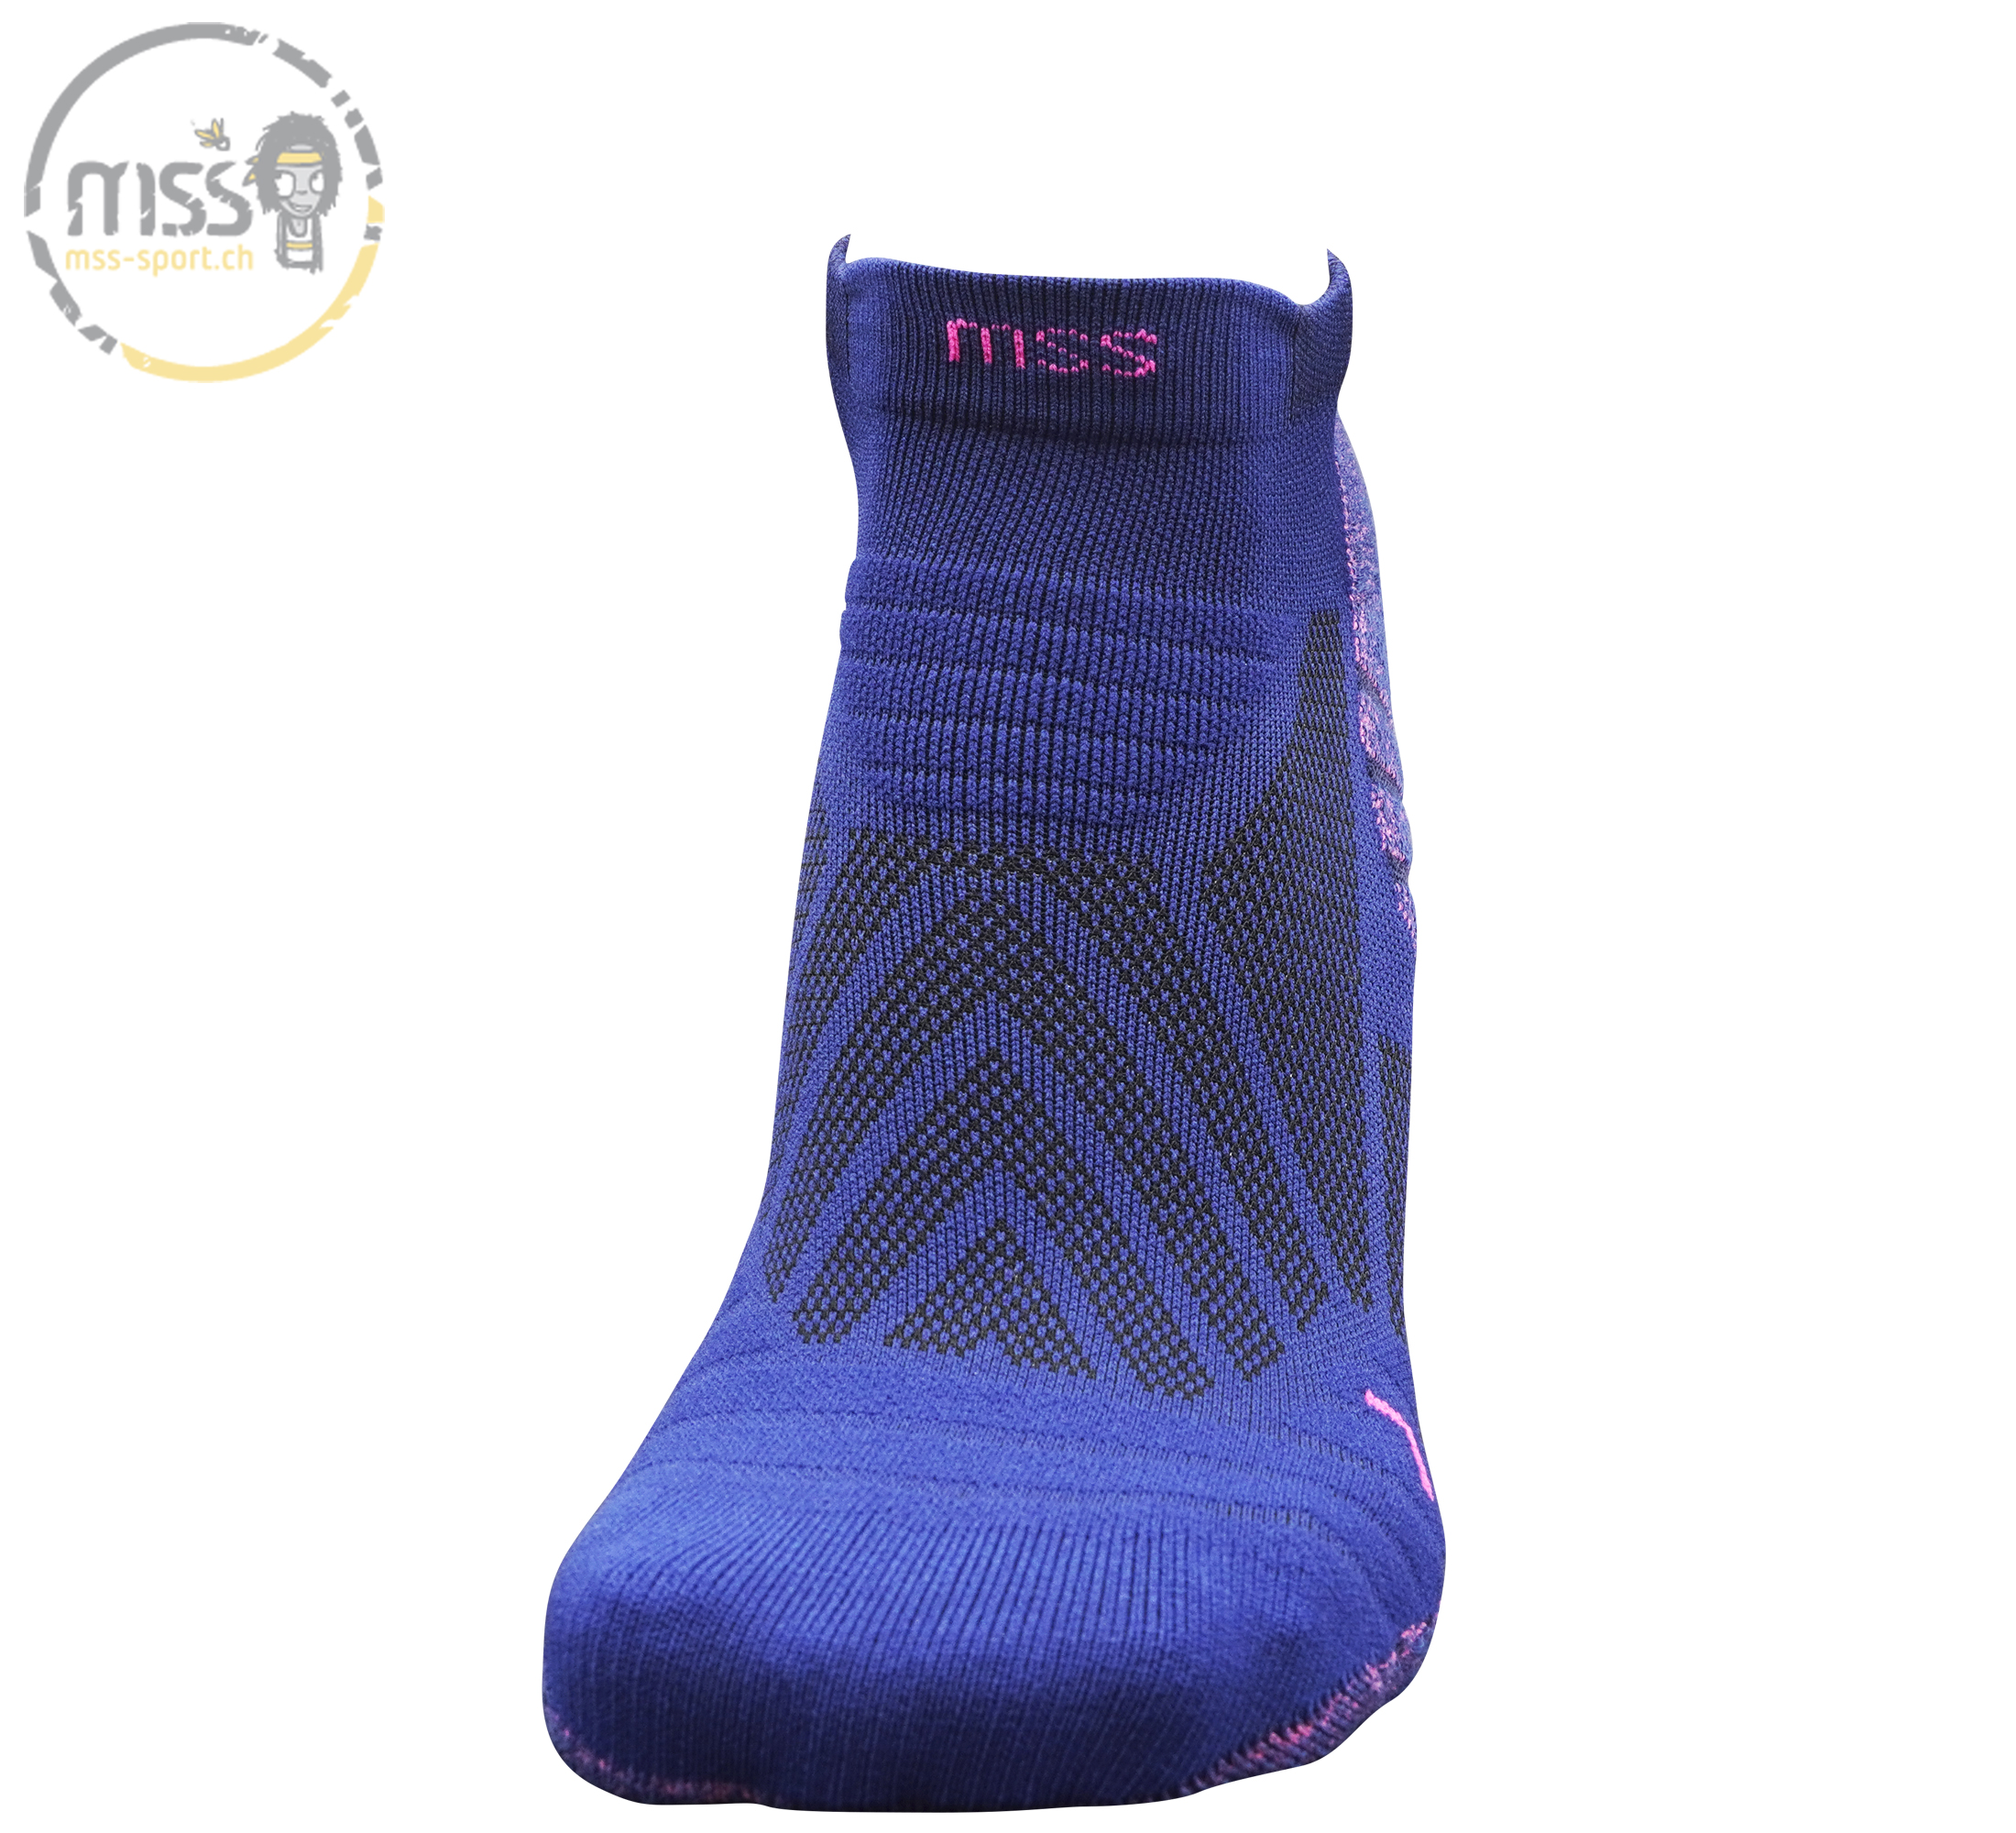 mss-socks GO 7300 low Lady navy pink